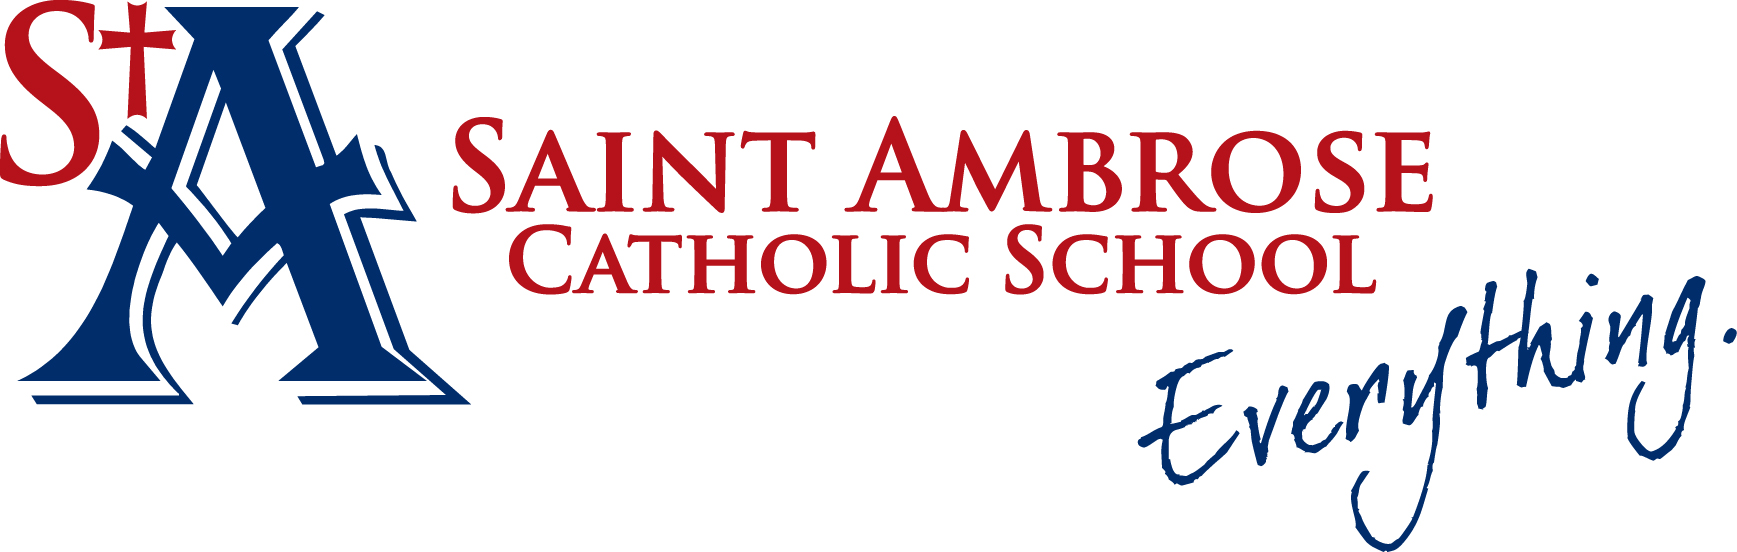 Day School Saint Ambrose Catholic Parish